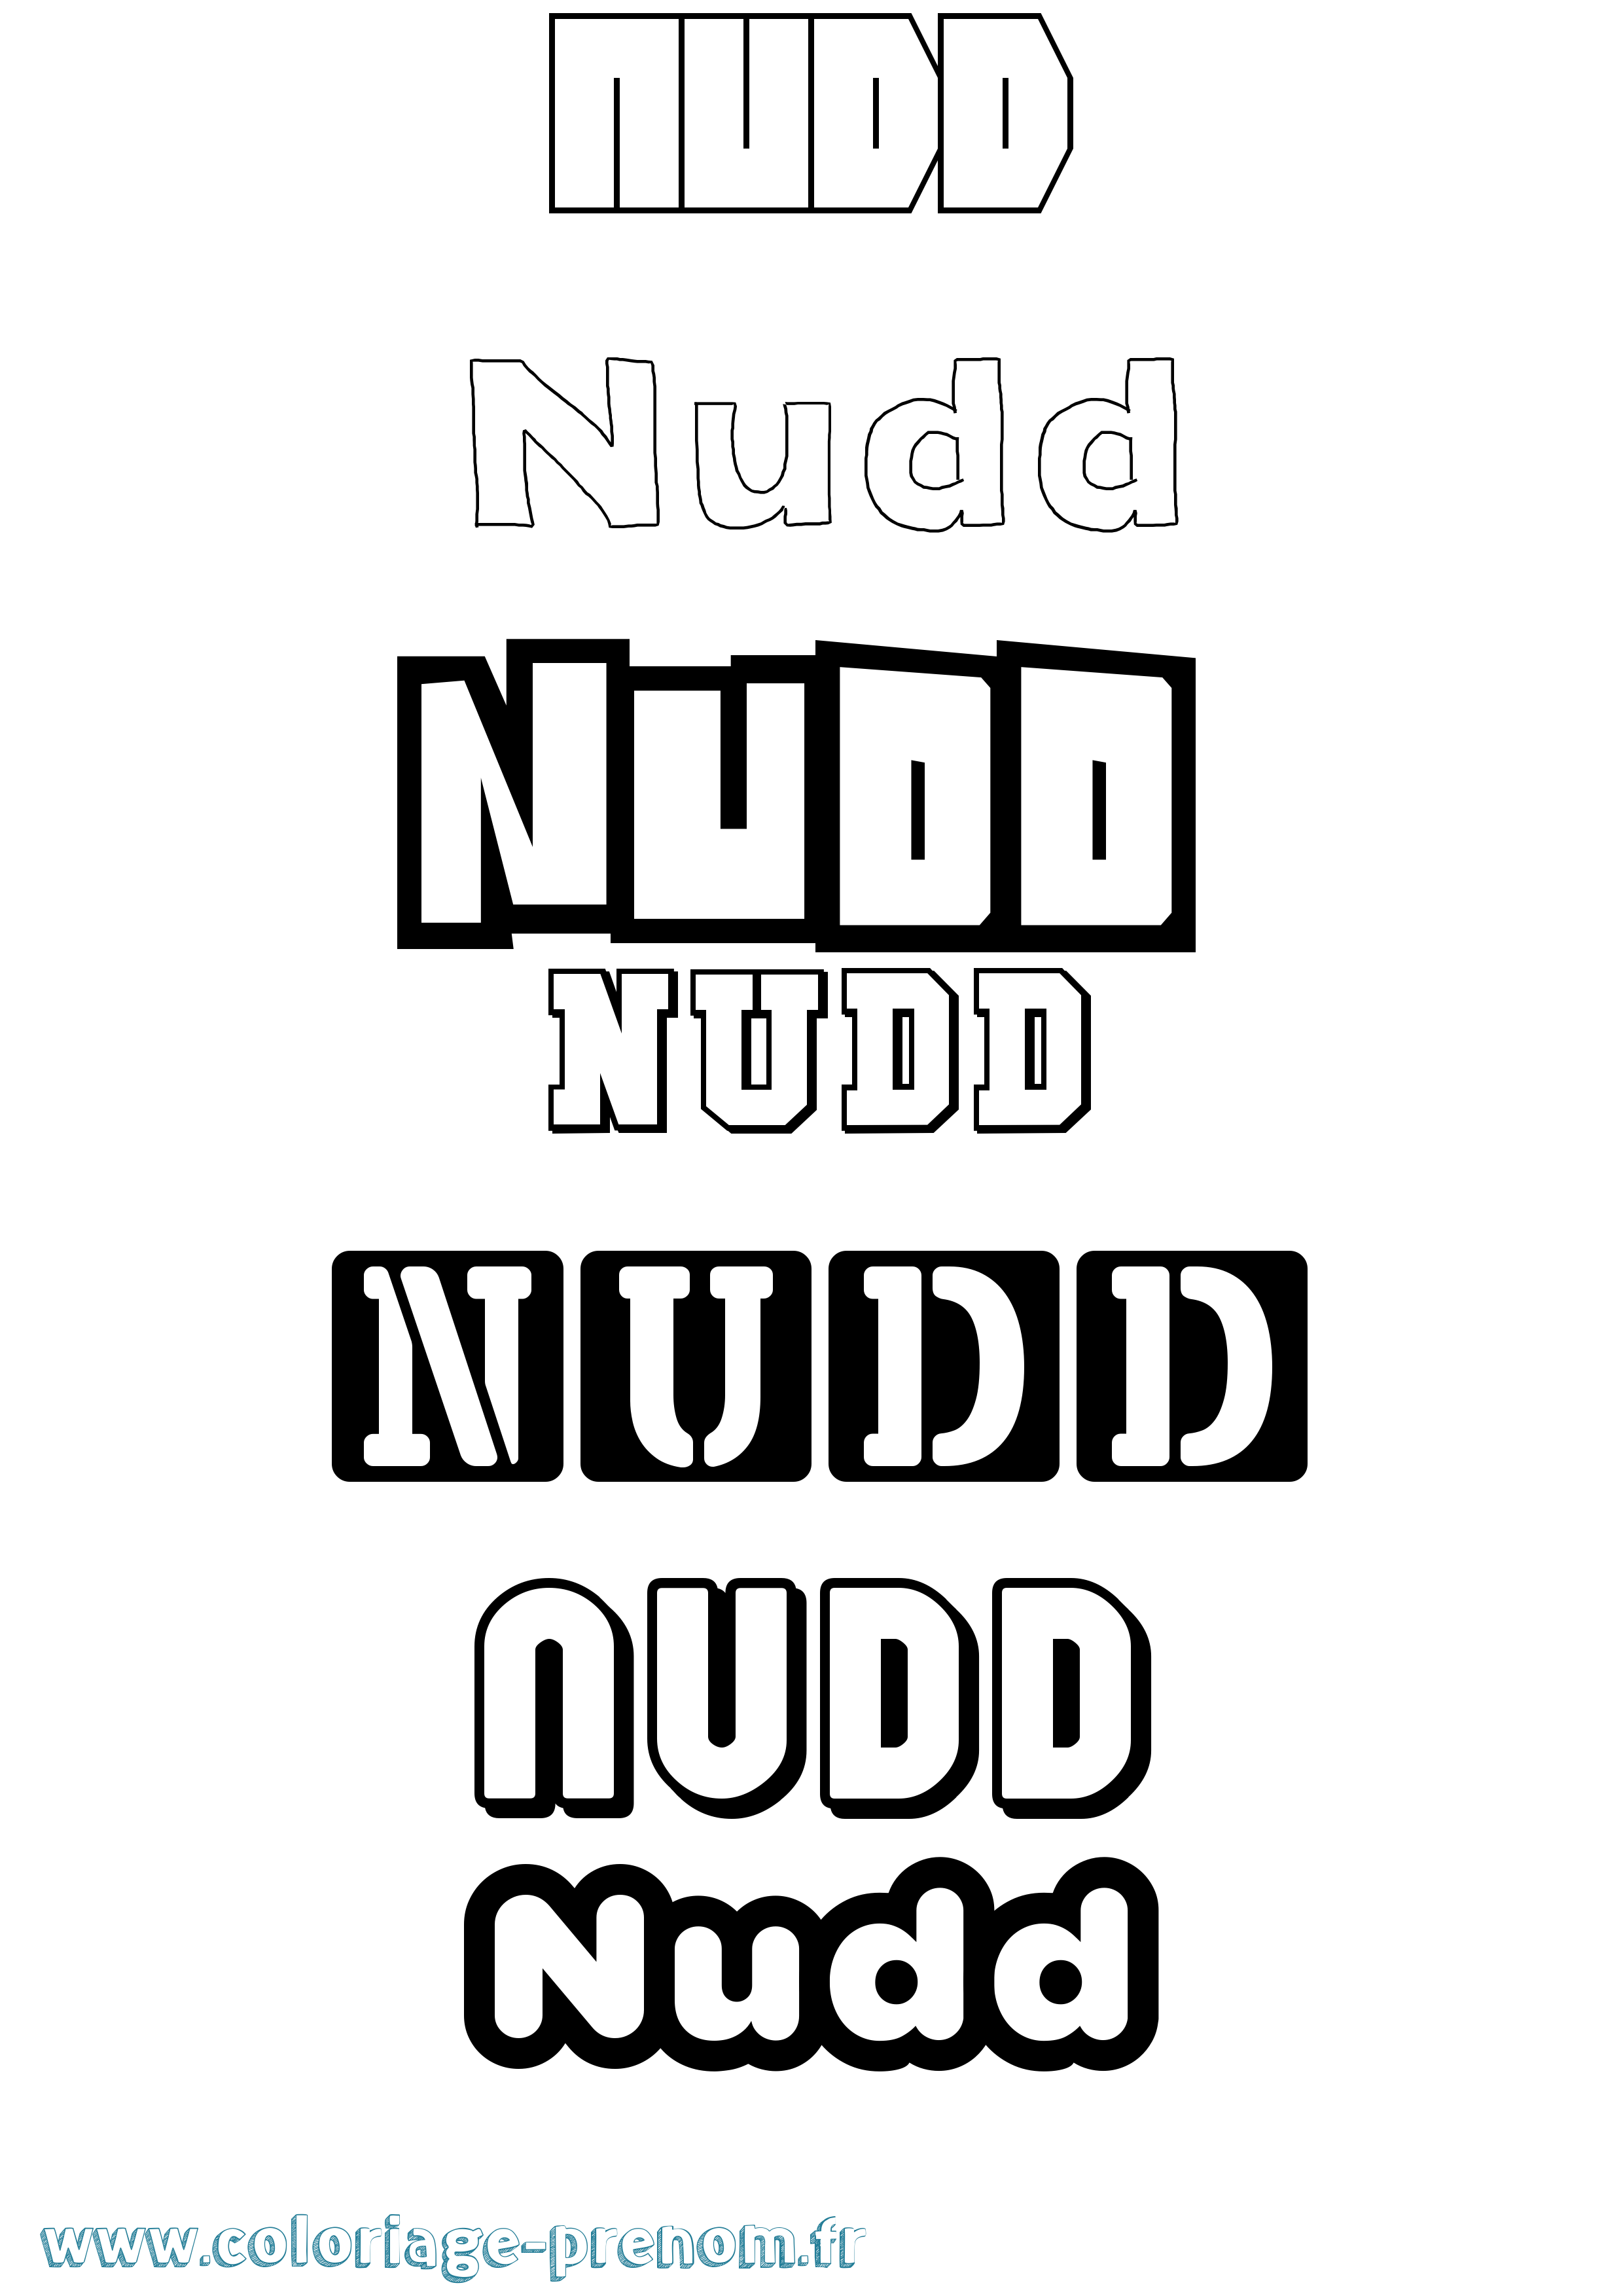 Coloriage prénom Nudd Simple